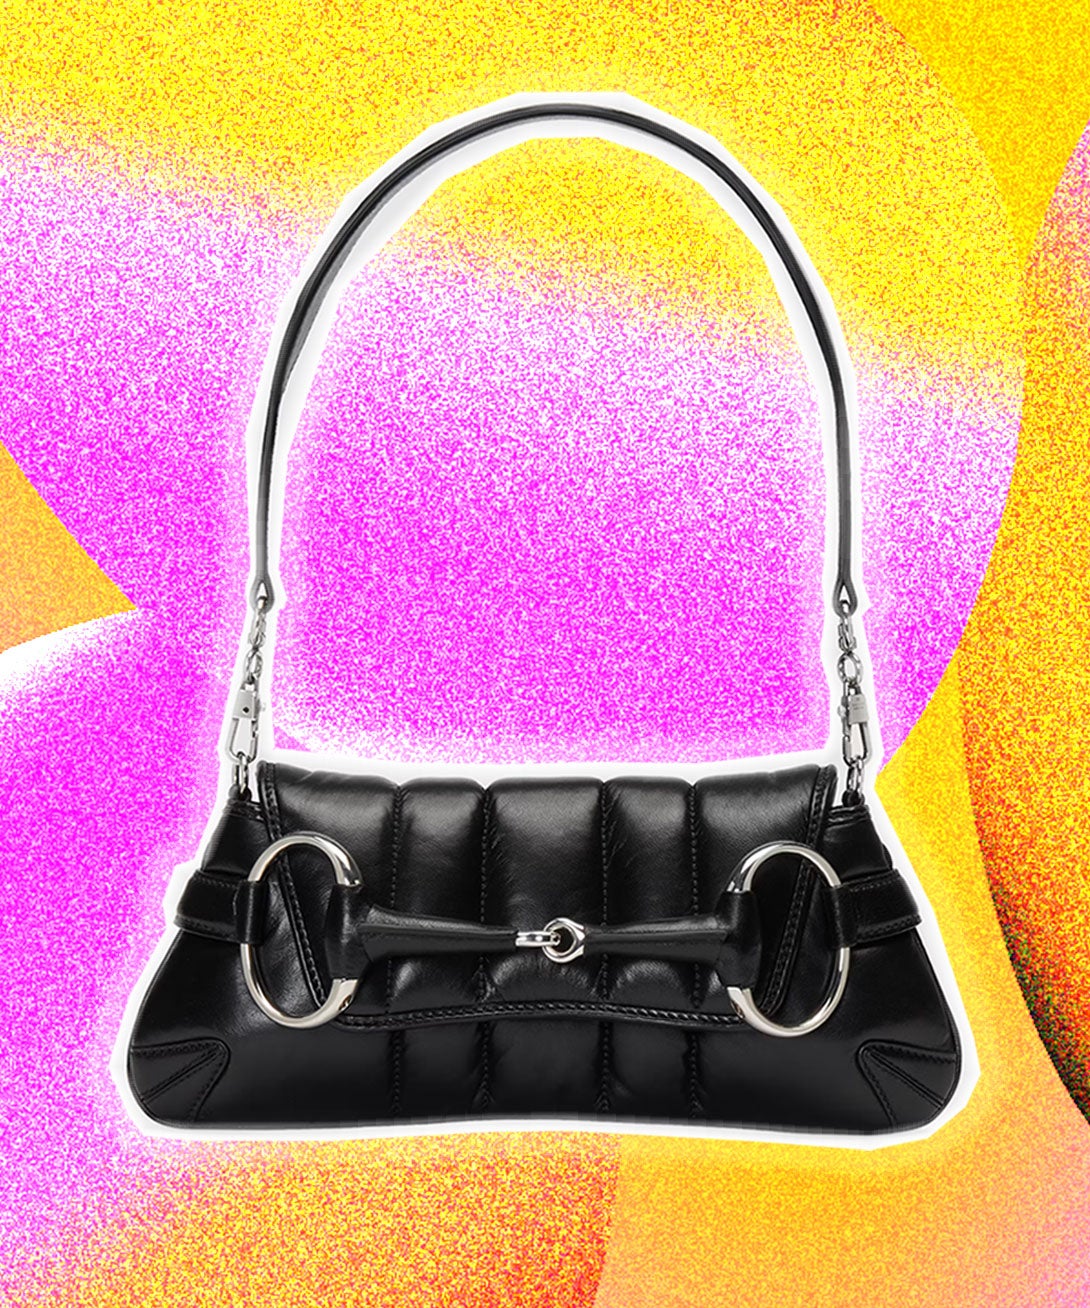 Beginner question : finding a Gucci handbag